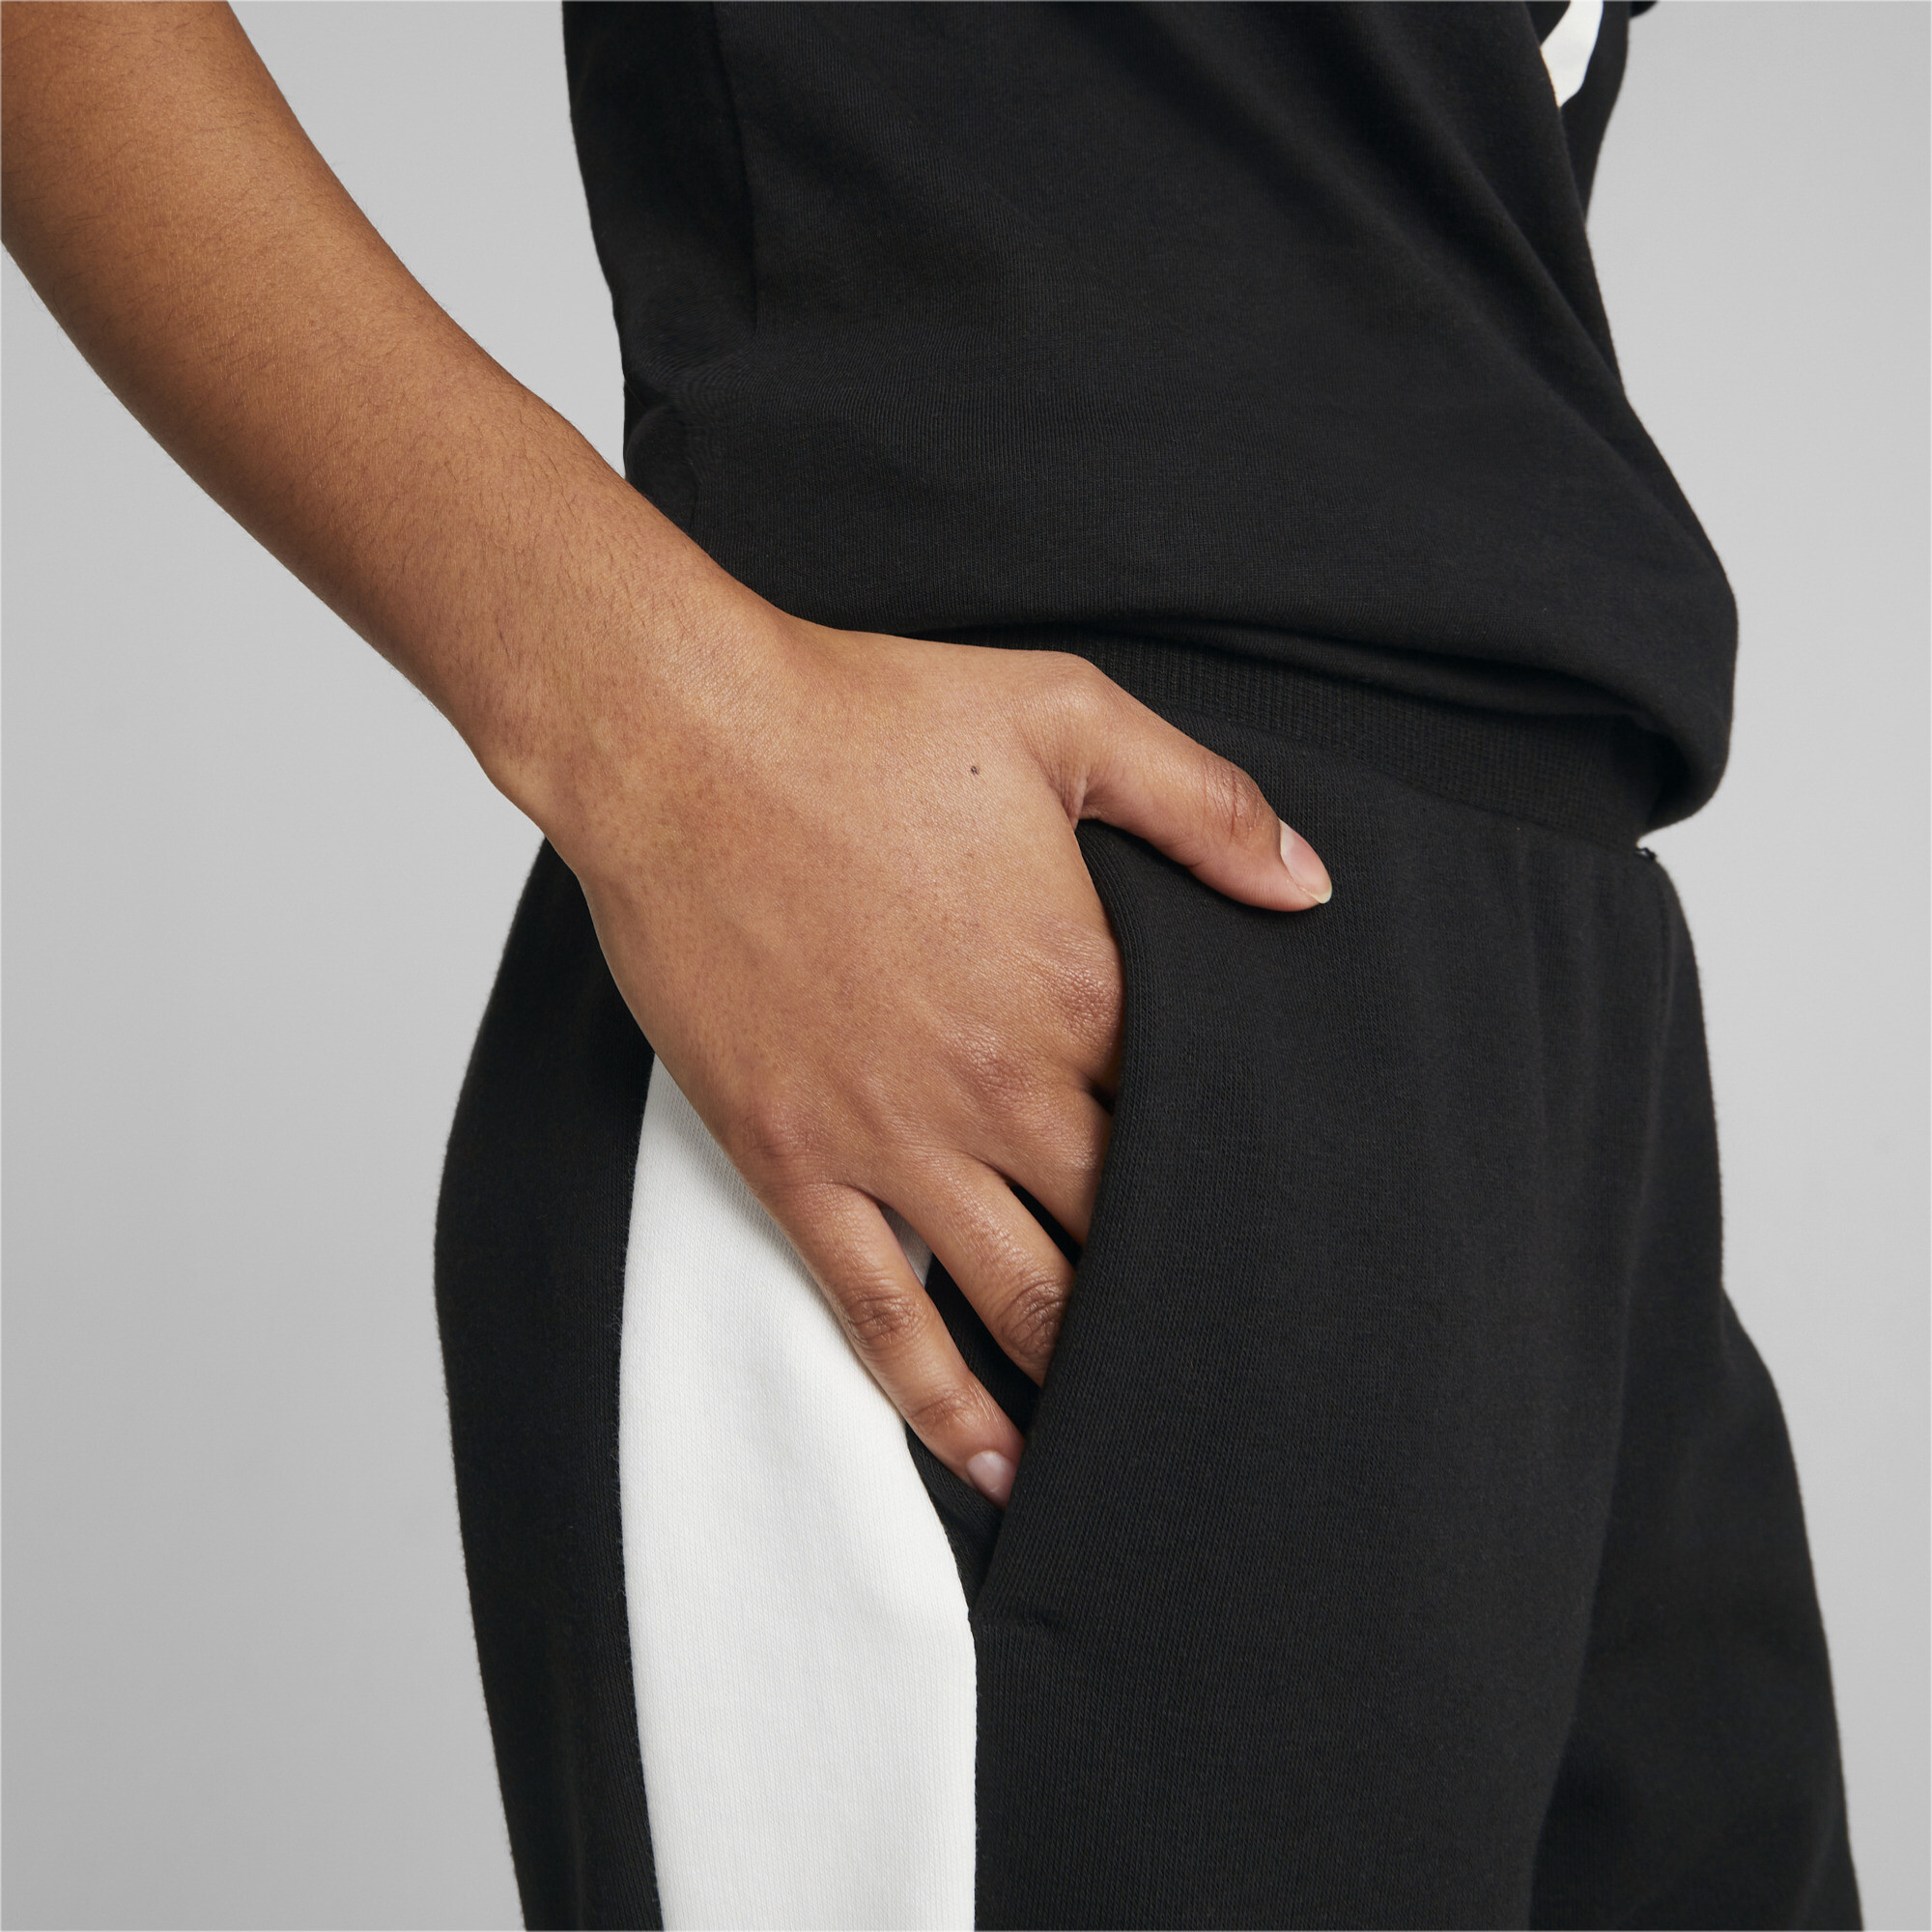 Women's Puma Iconic T7's Track Pants, Black, Size XL, Clothing